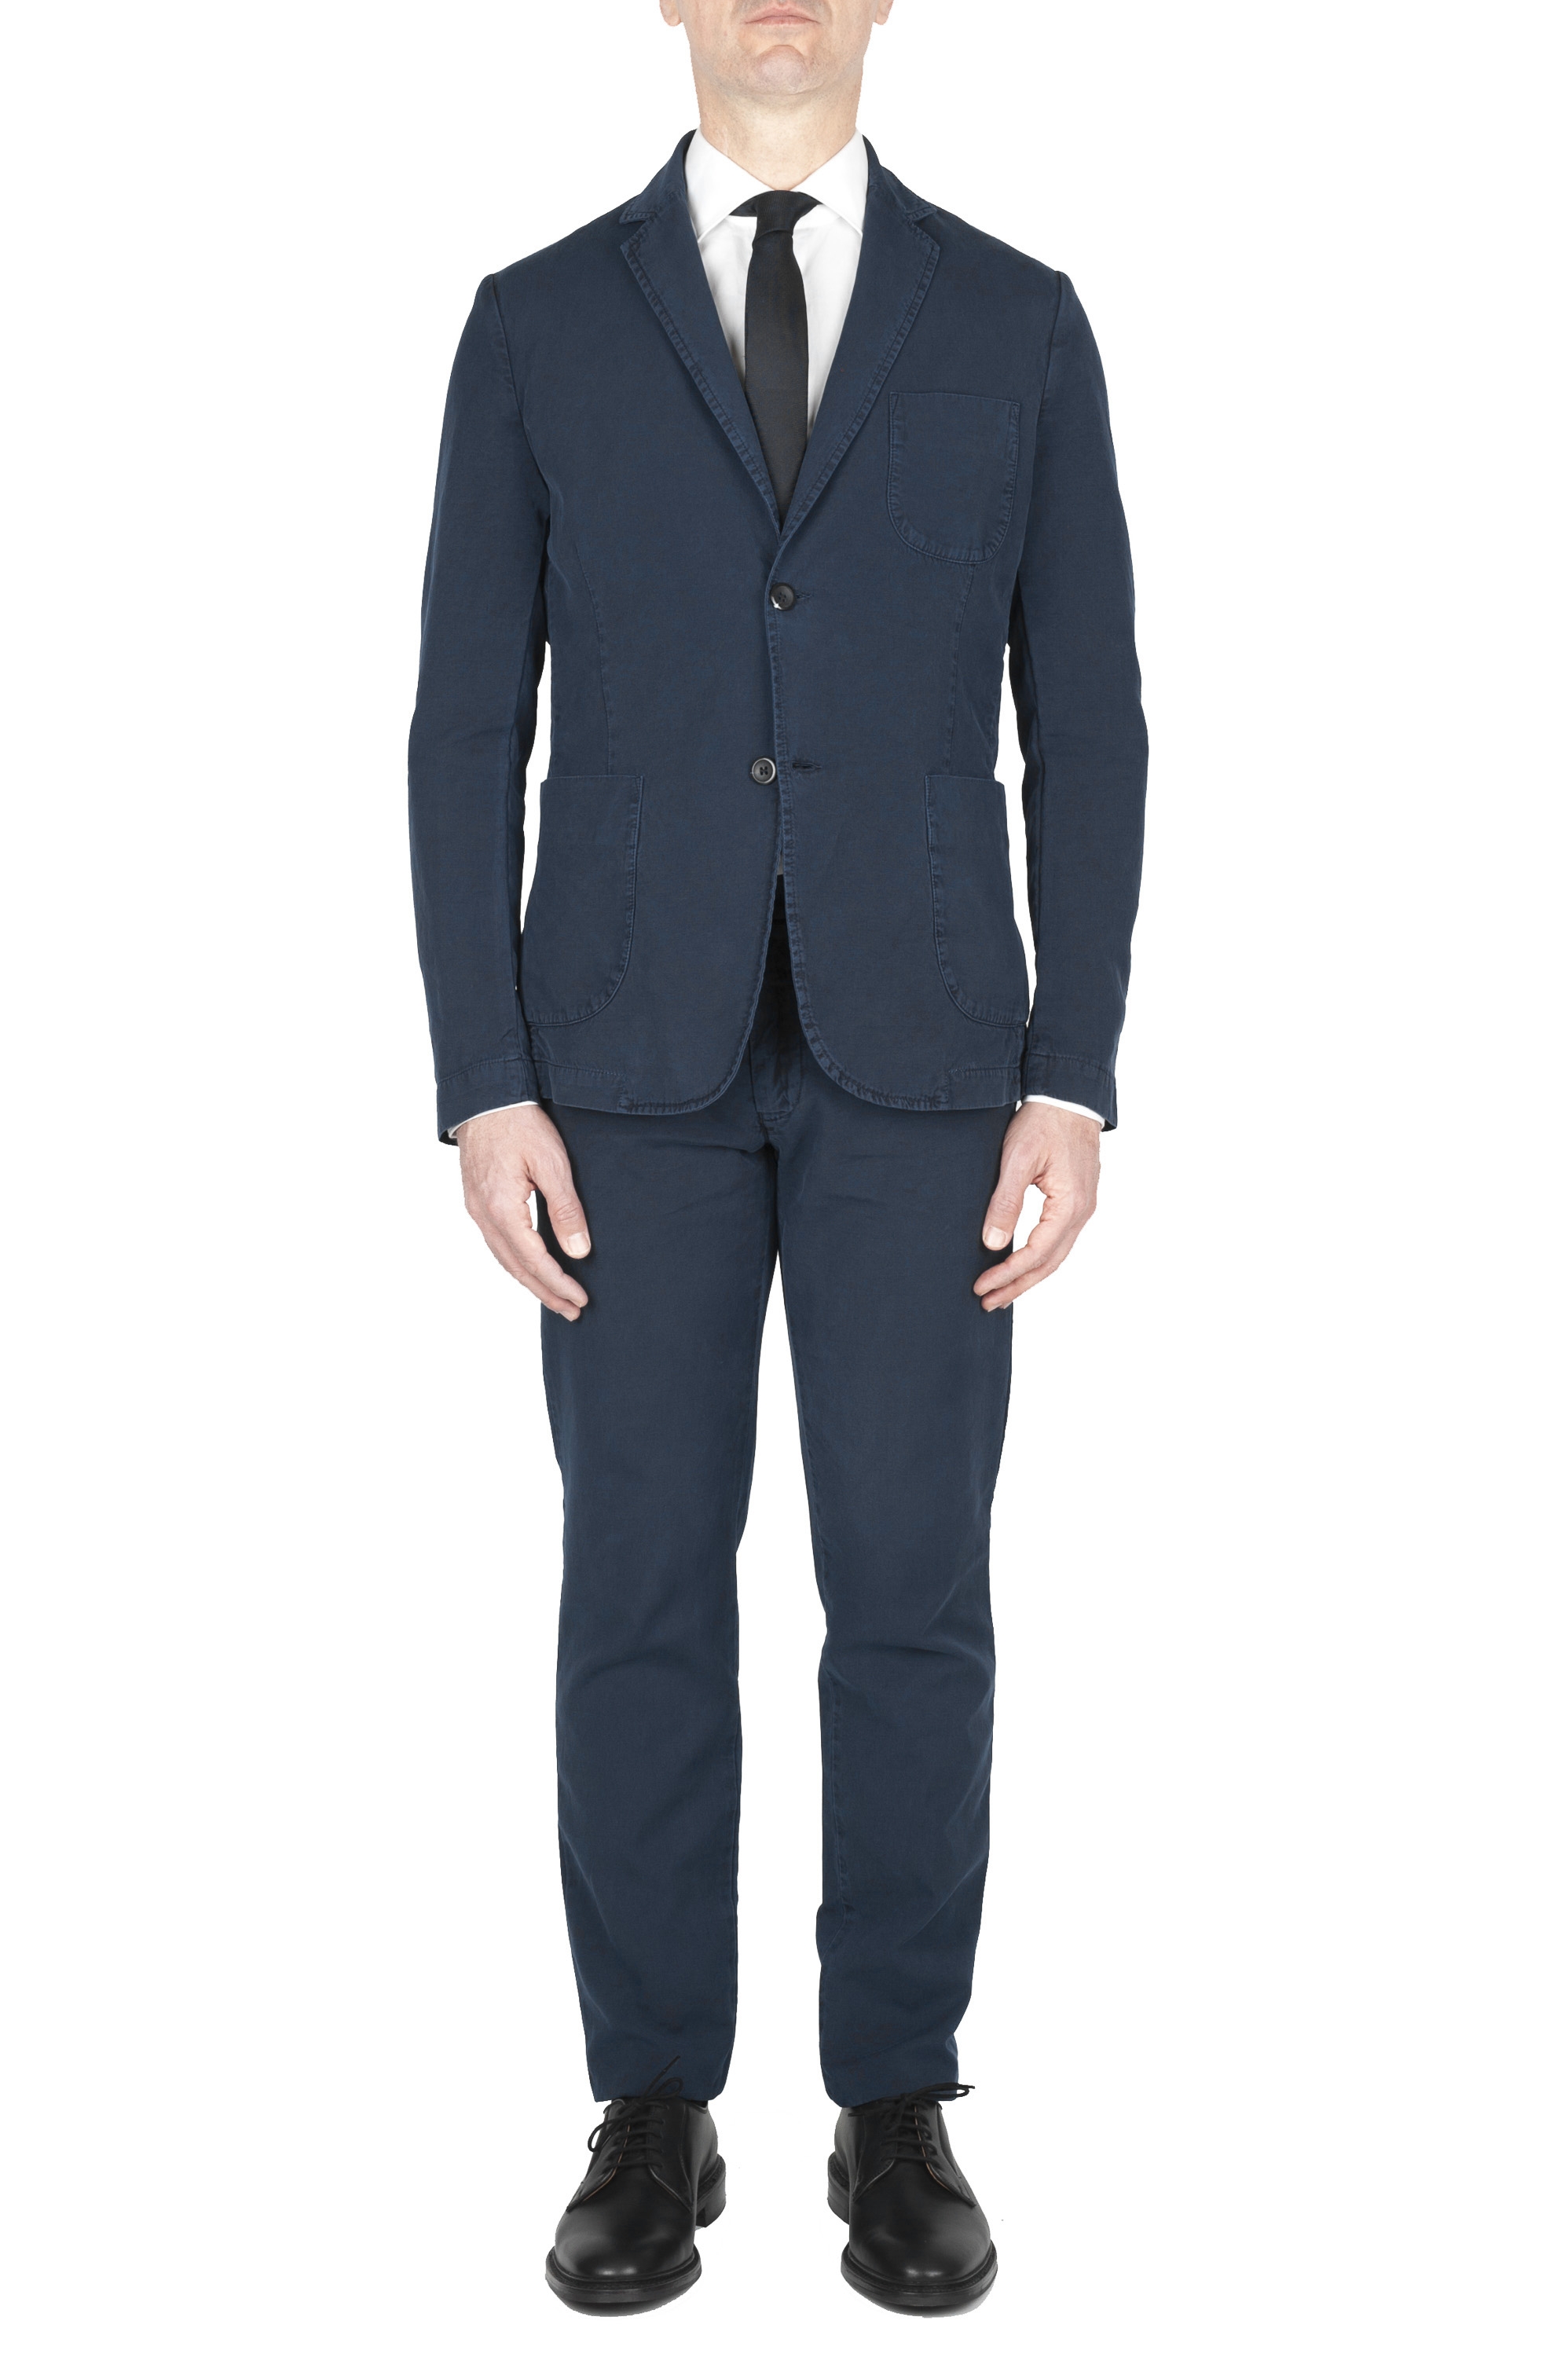 SBU 01746_19AW Navy blue cotton sport suit blazer and trouser 01